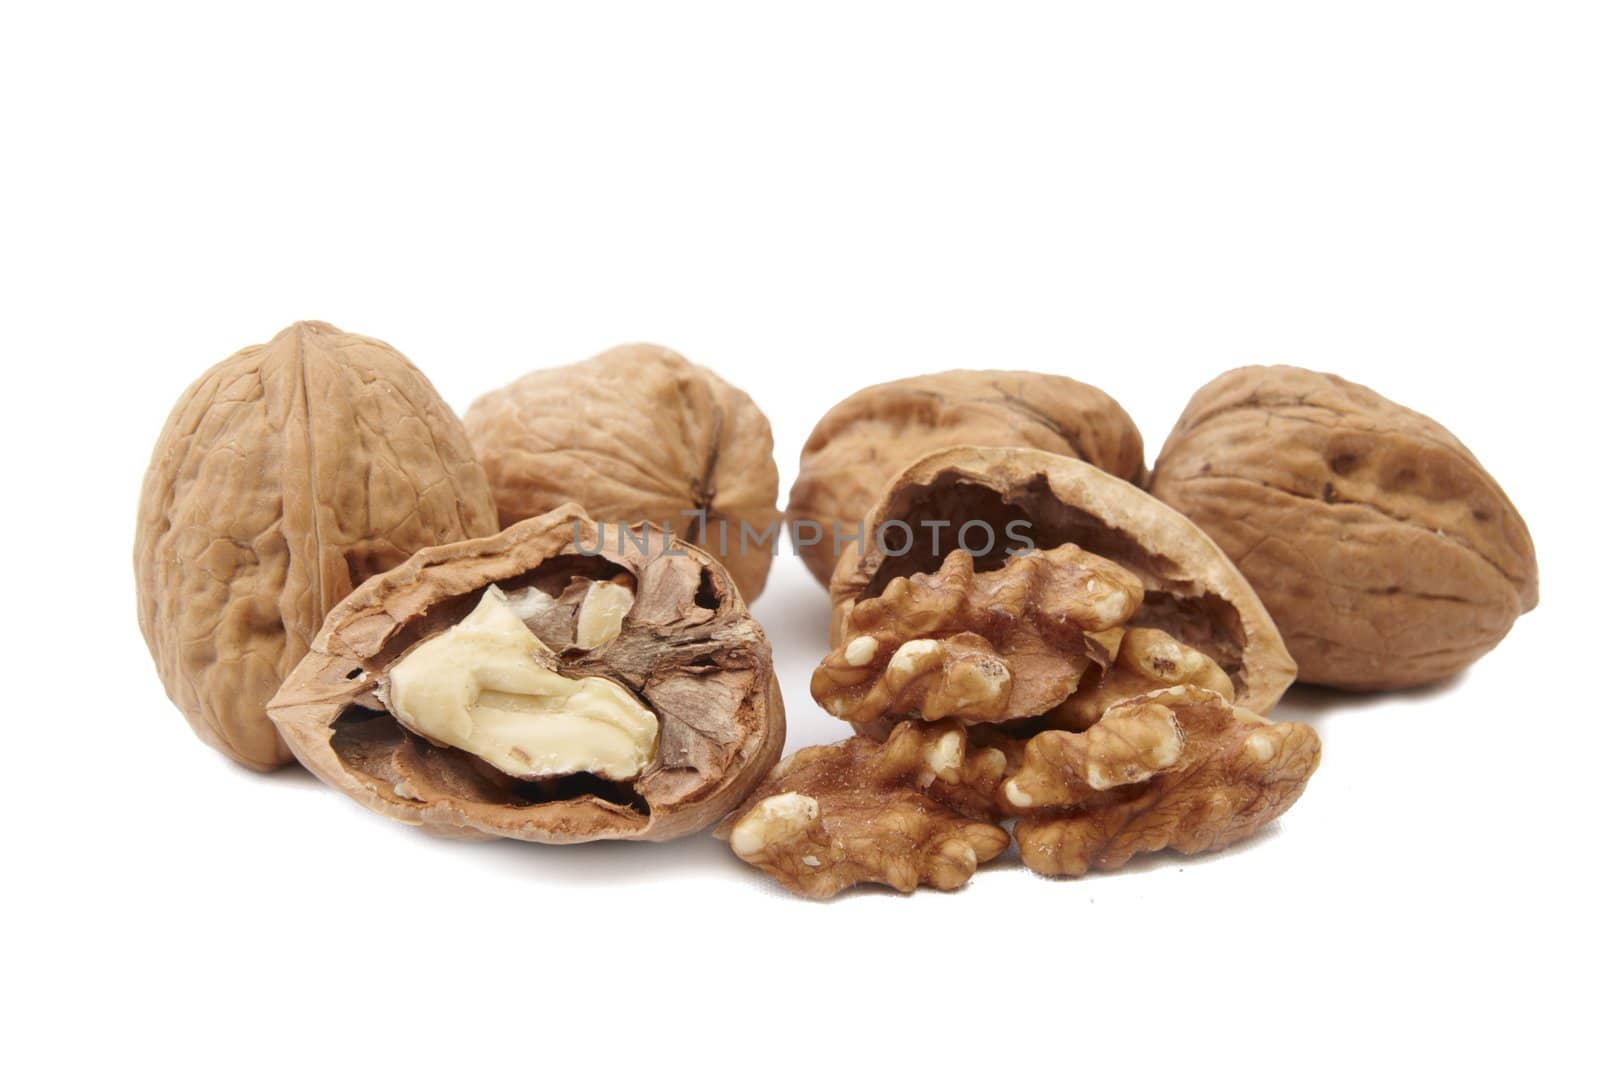 Isolated walnuts by Nikonas